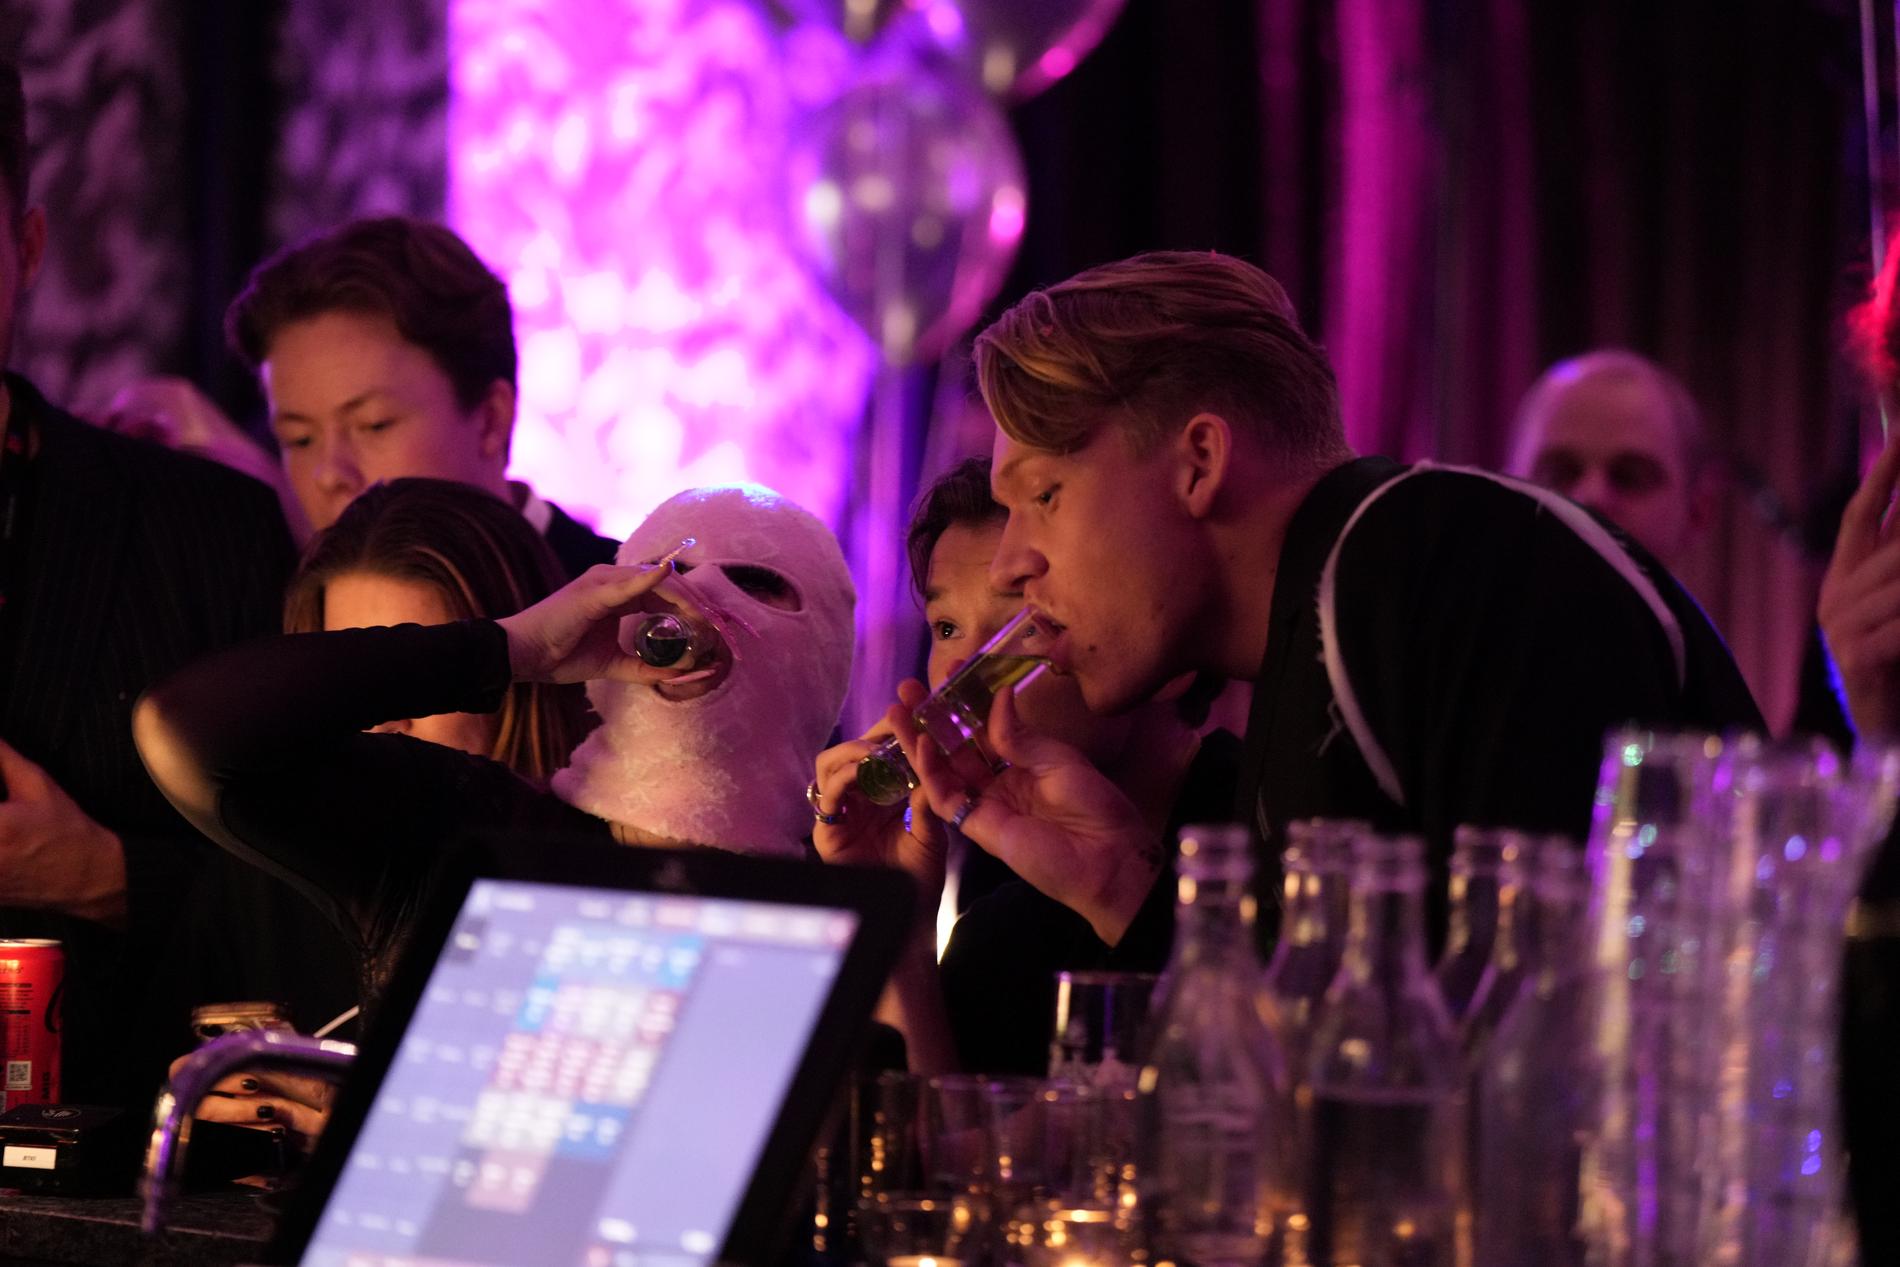 Adam Woods, Fröken Snusk och Martinus Gunnarsen shotar i baren.